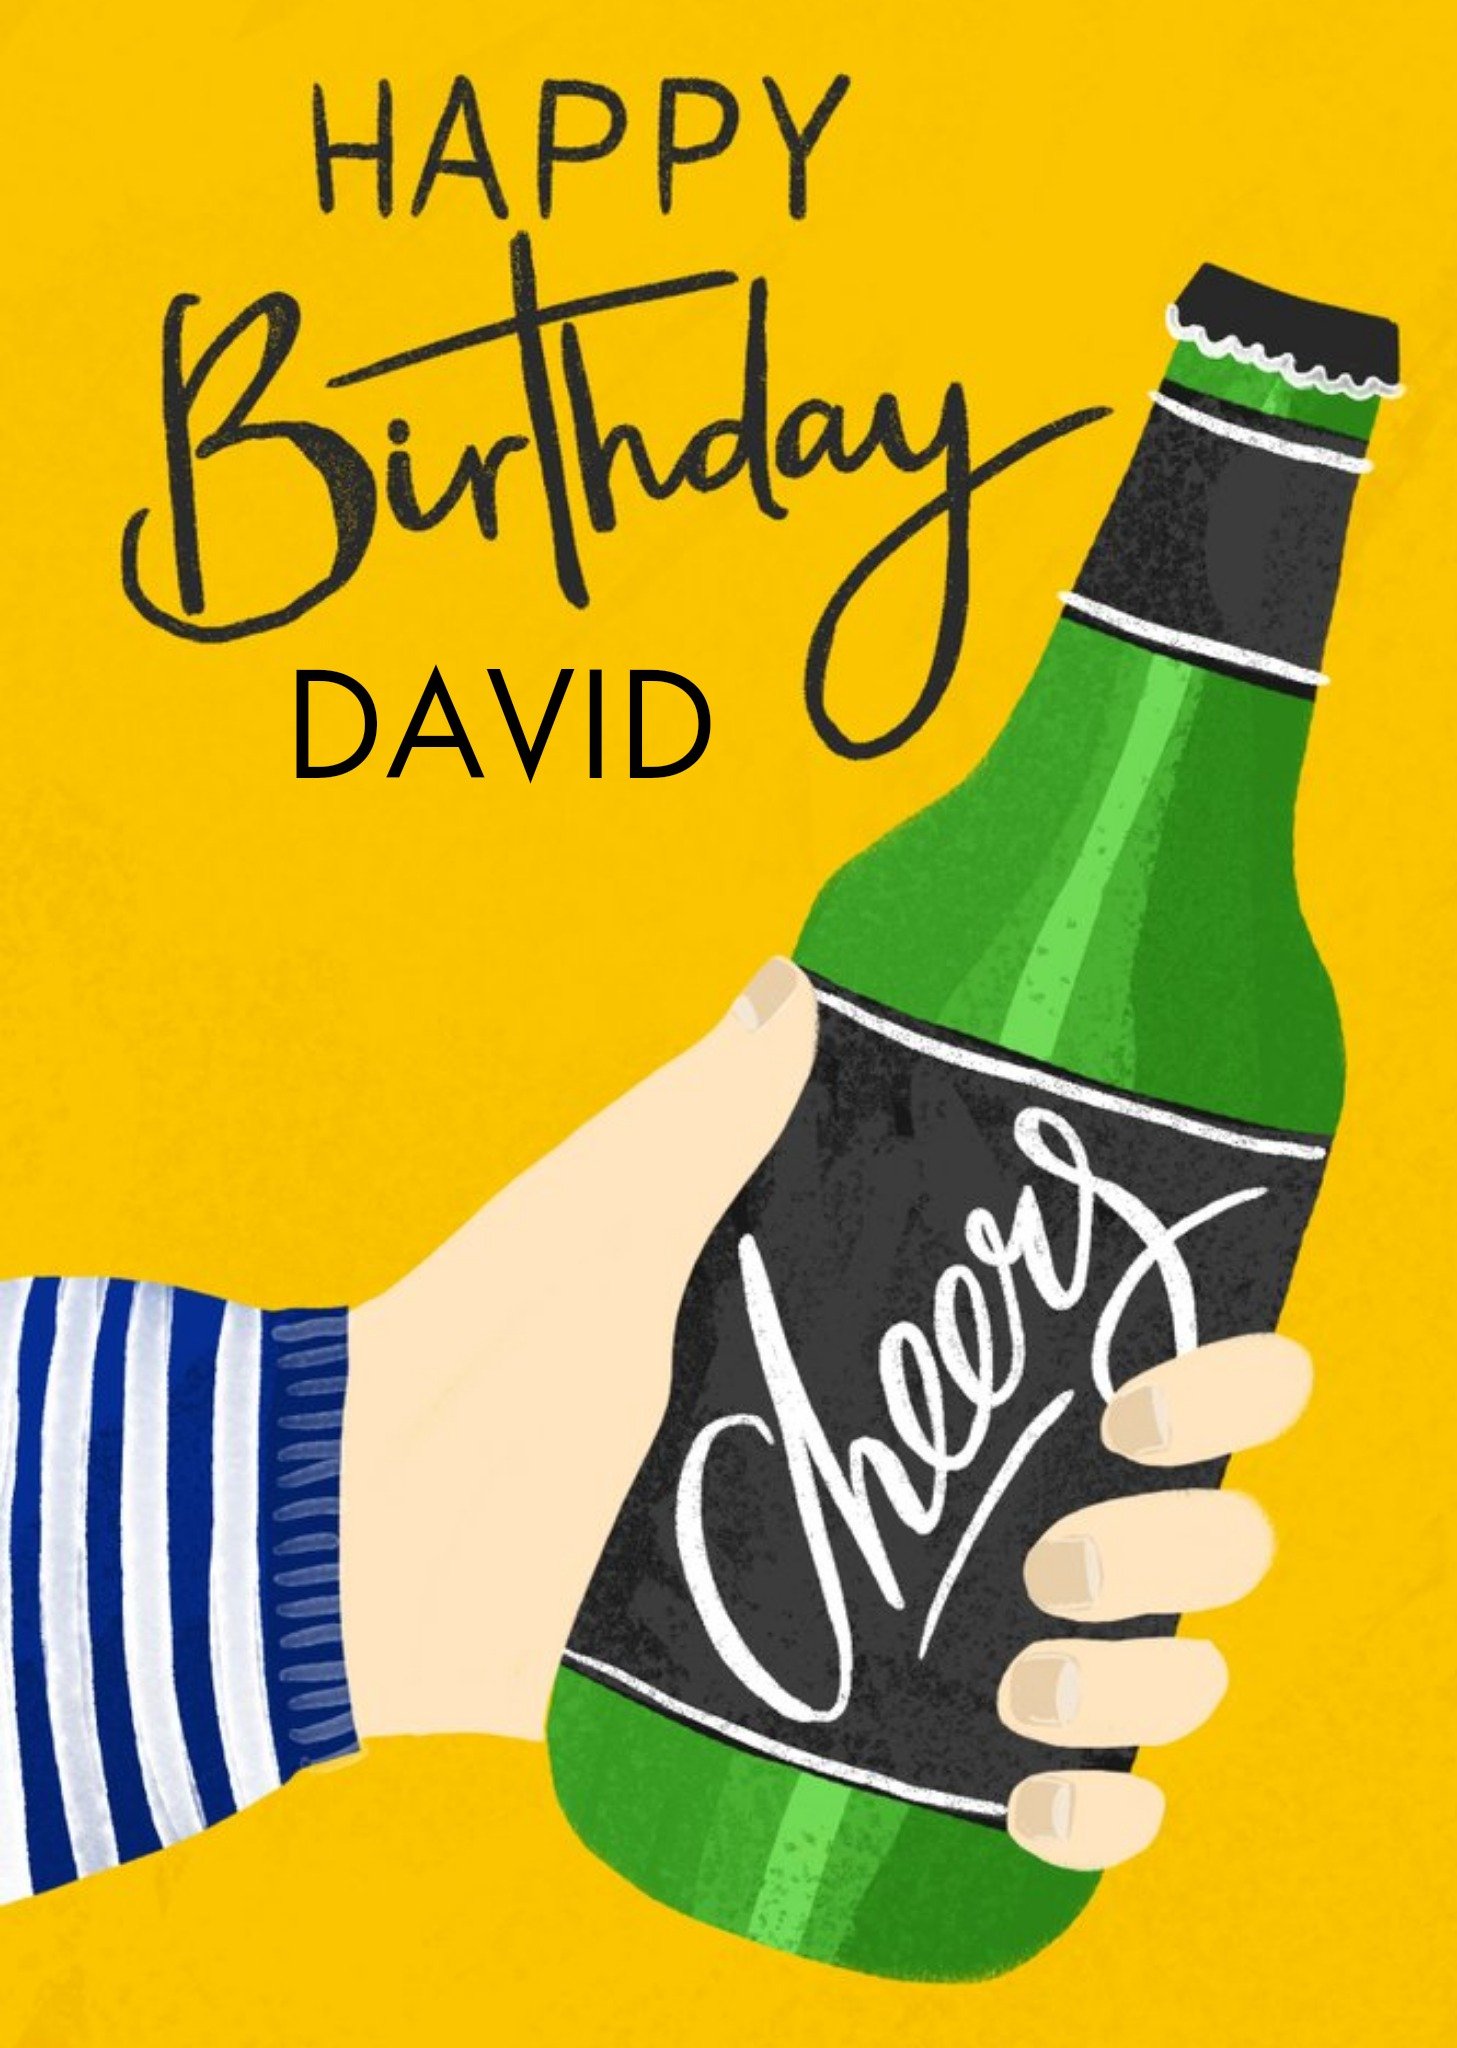 Okey Dokey Design Beer Illustration Cheers Birthday Card, Large